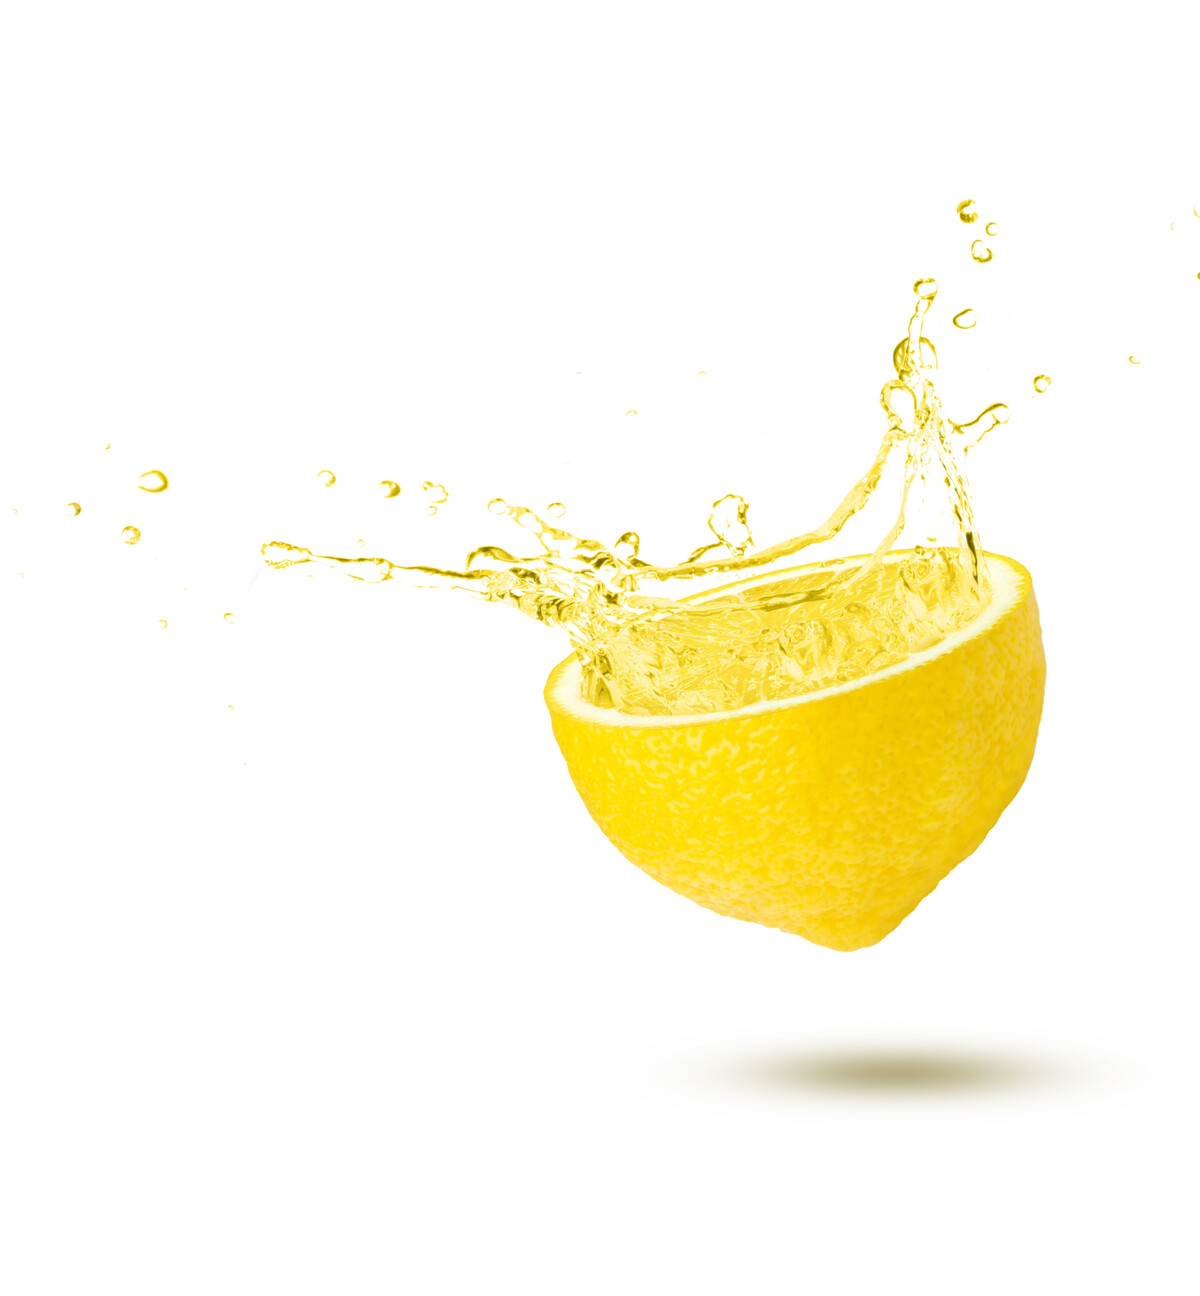 A half lemon surrounded by a splash of liquid.